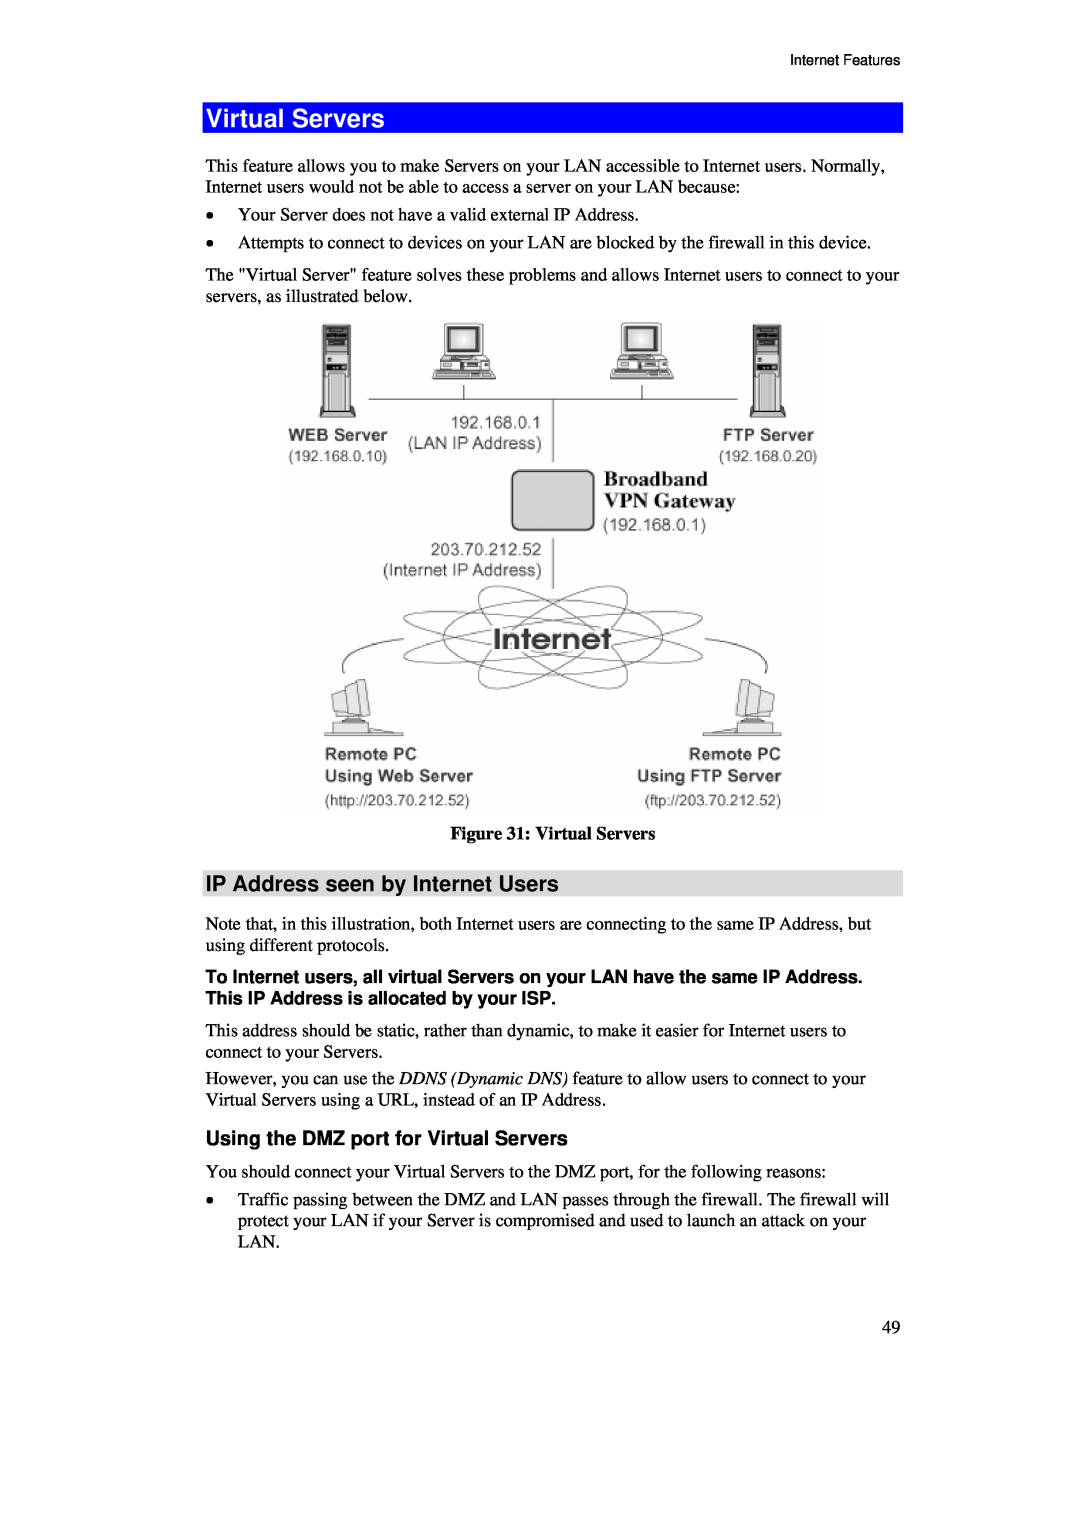 TRENDnet BRV204 manual Virtual Servers, IP Address seen by Internet Users 